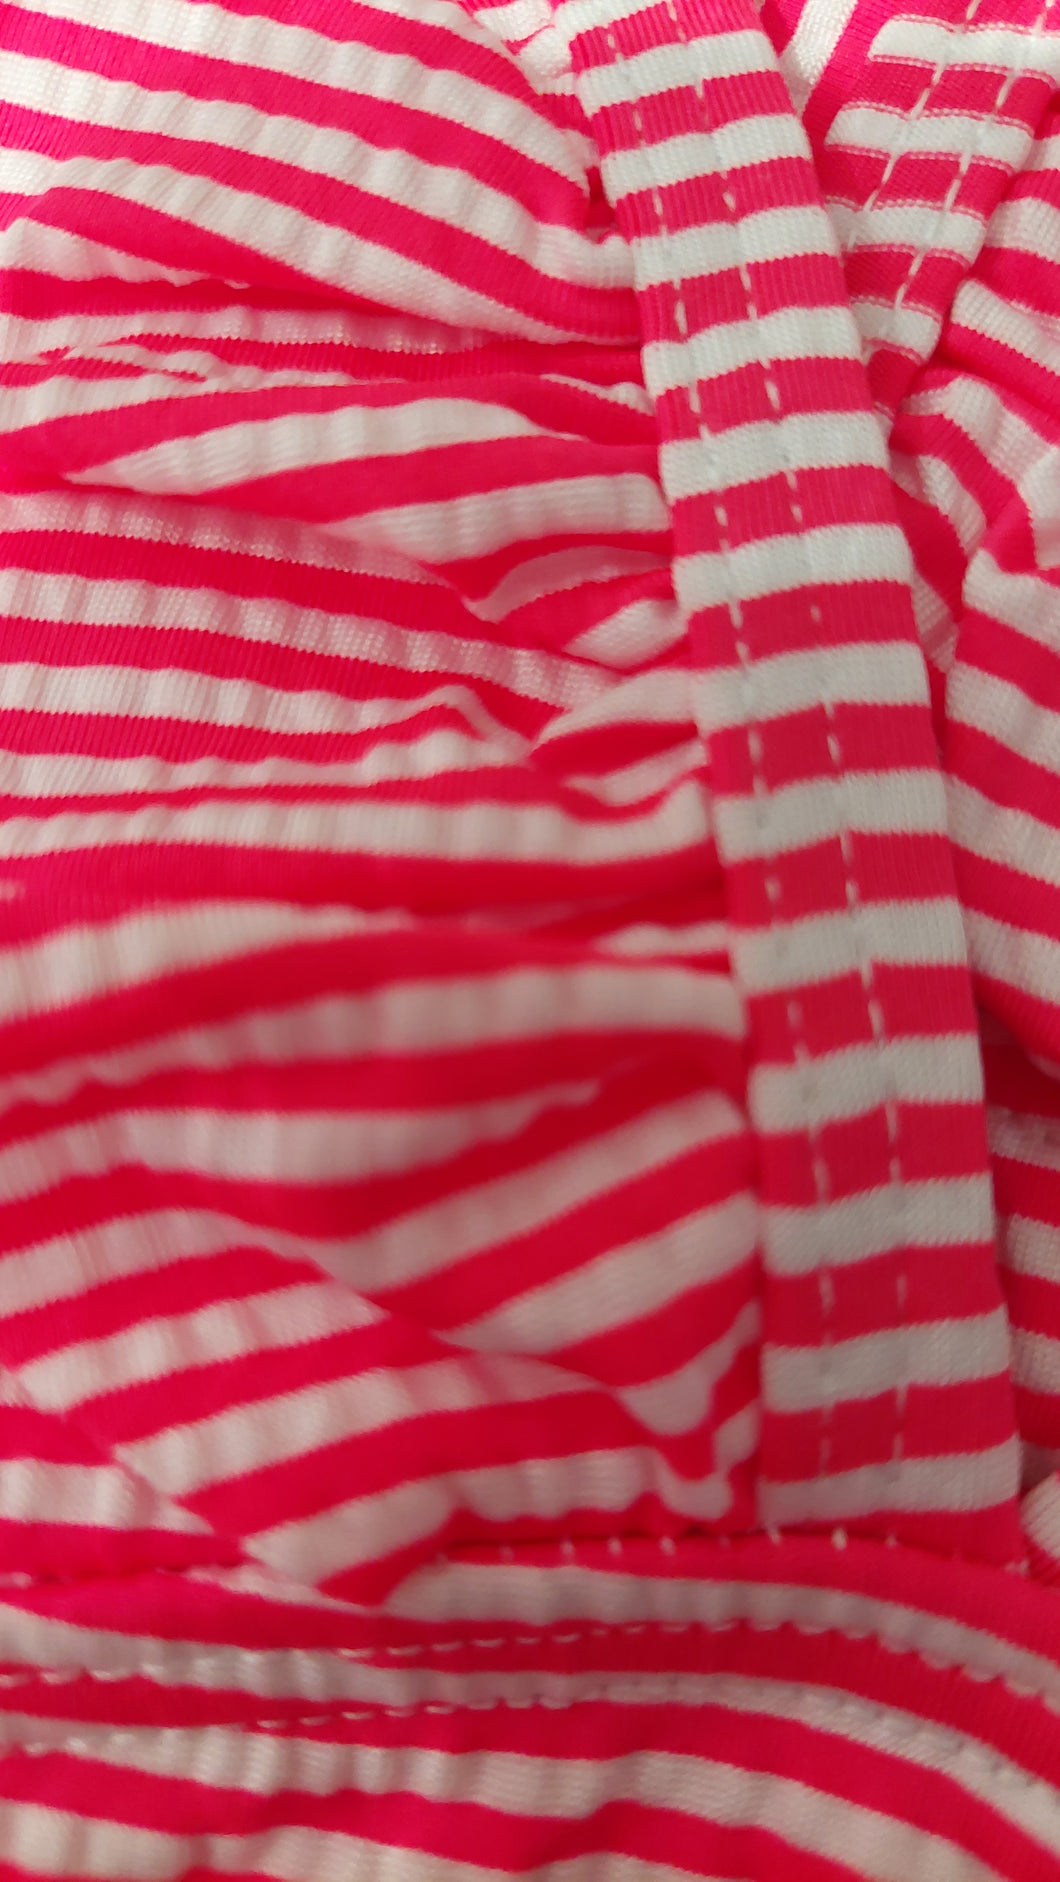 Swimsuit Stripes & Ruffles, 2 colors